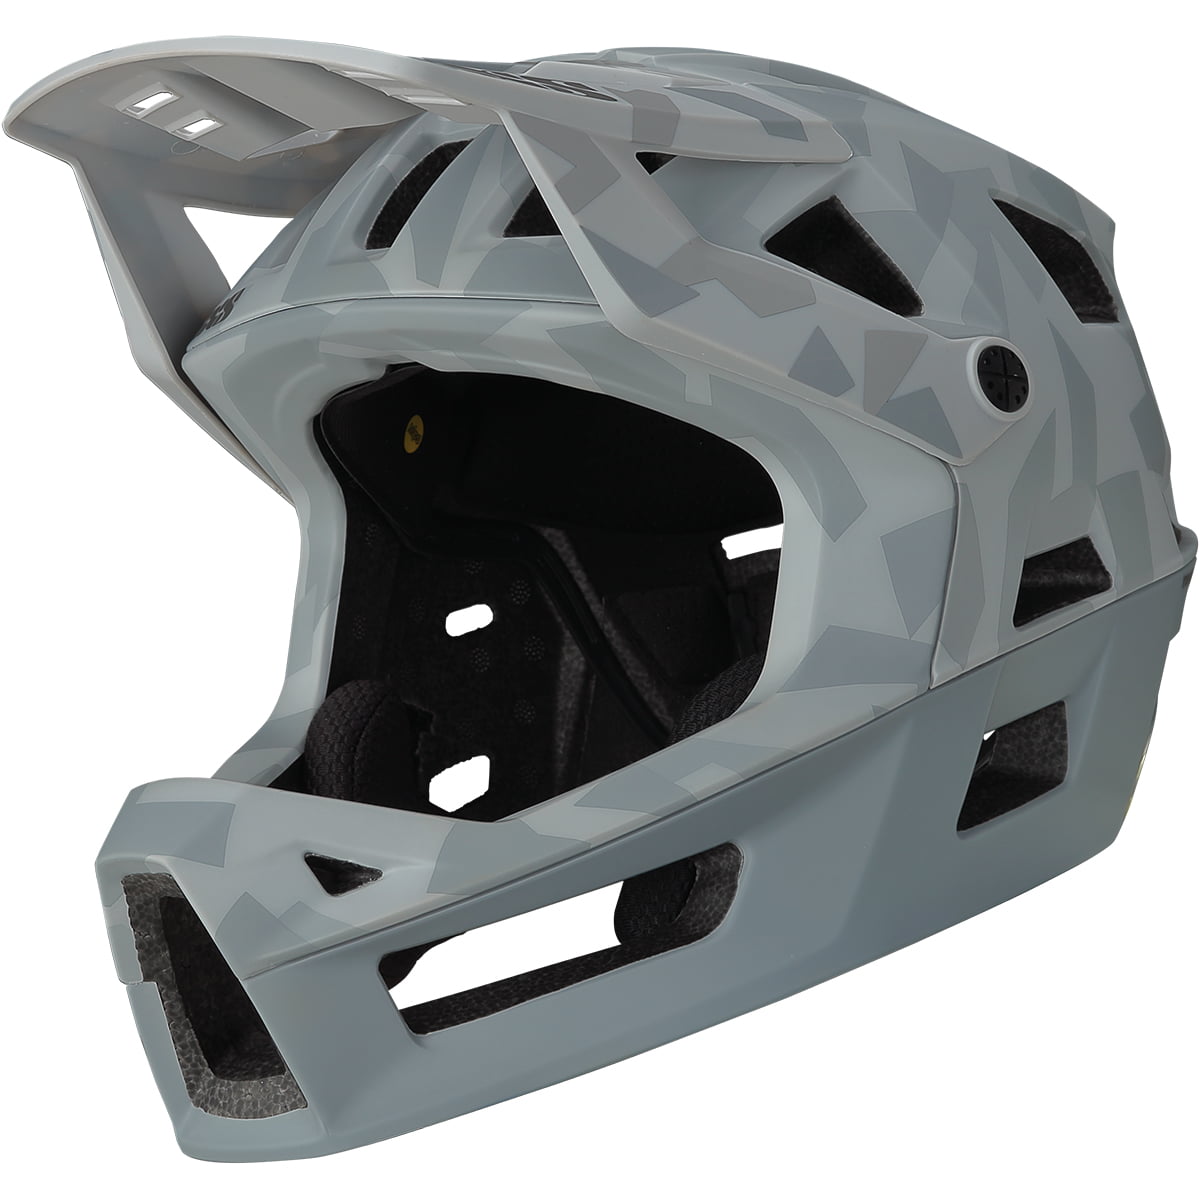 iXS Trigger FF MIPS Enduro Mountain Bike Full Face Helmet Grey XS(49-54cm) Walmart.com